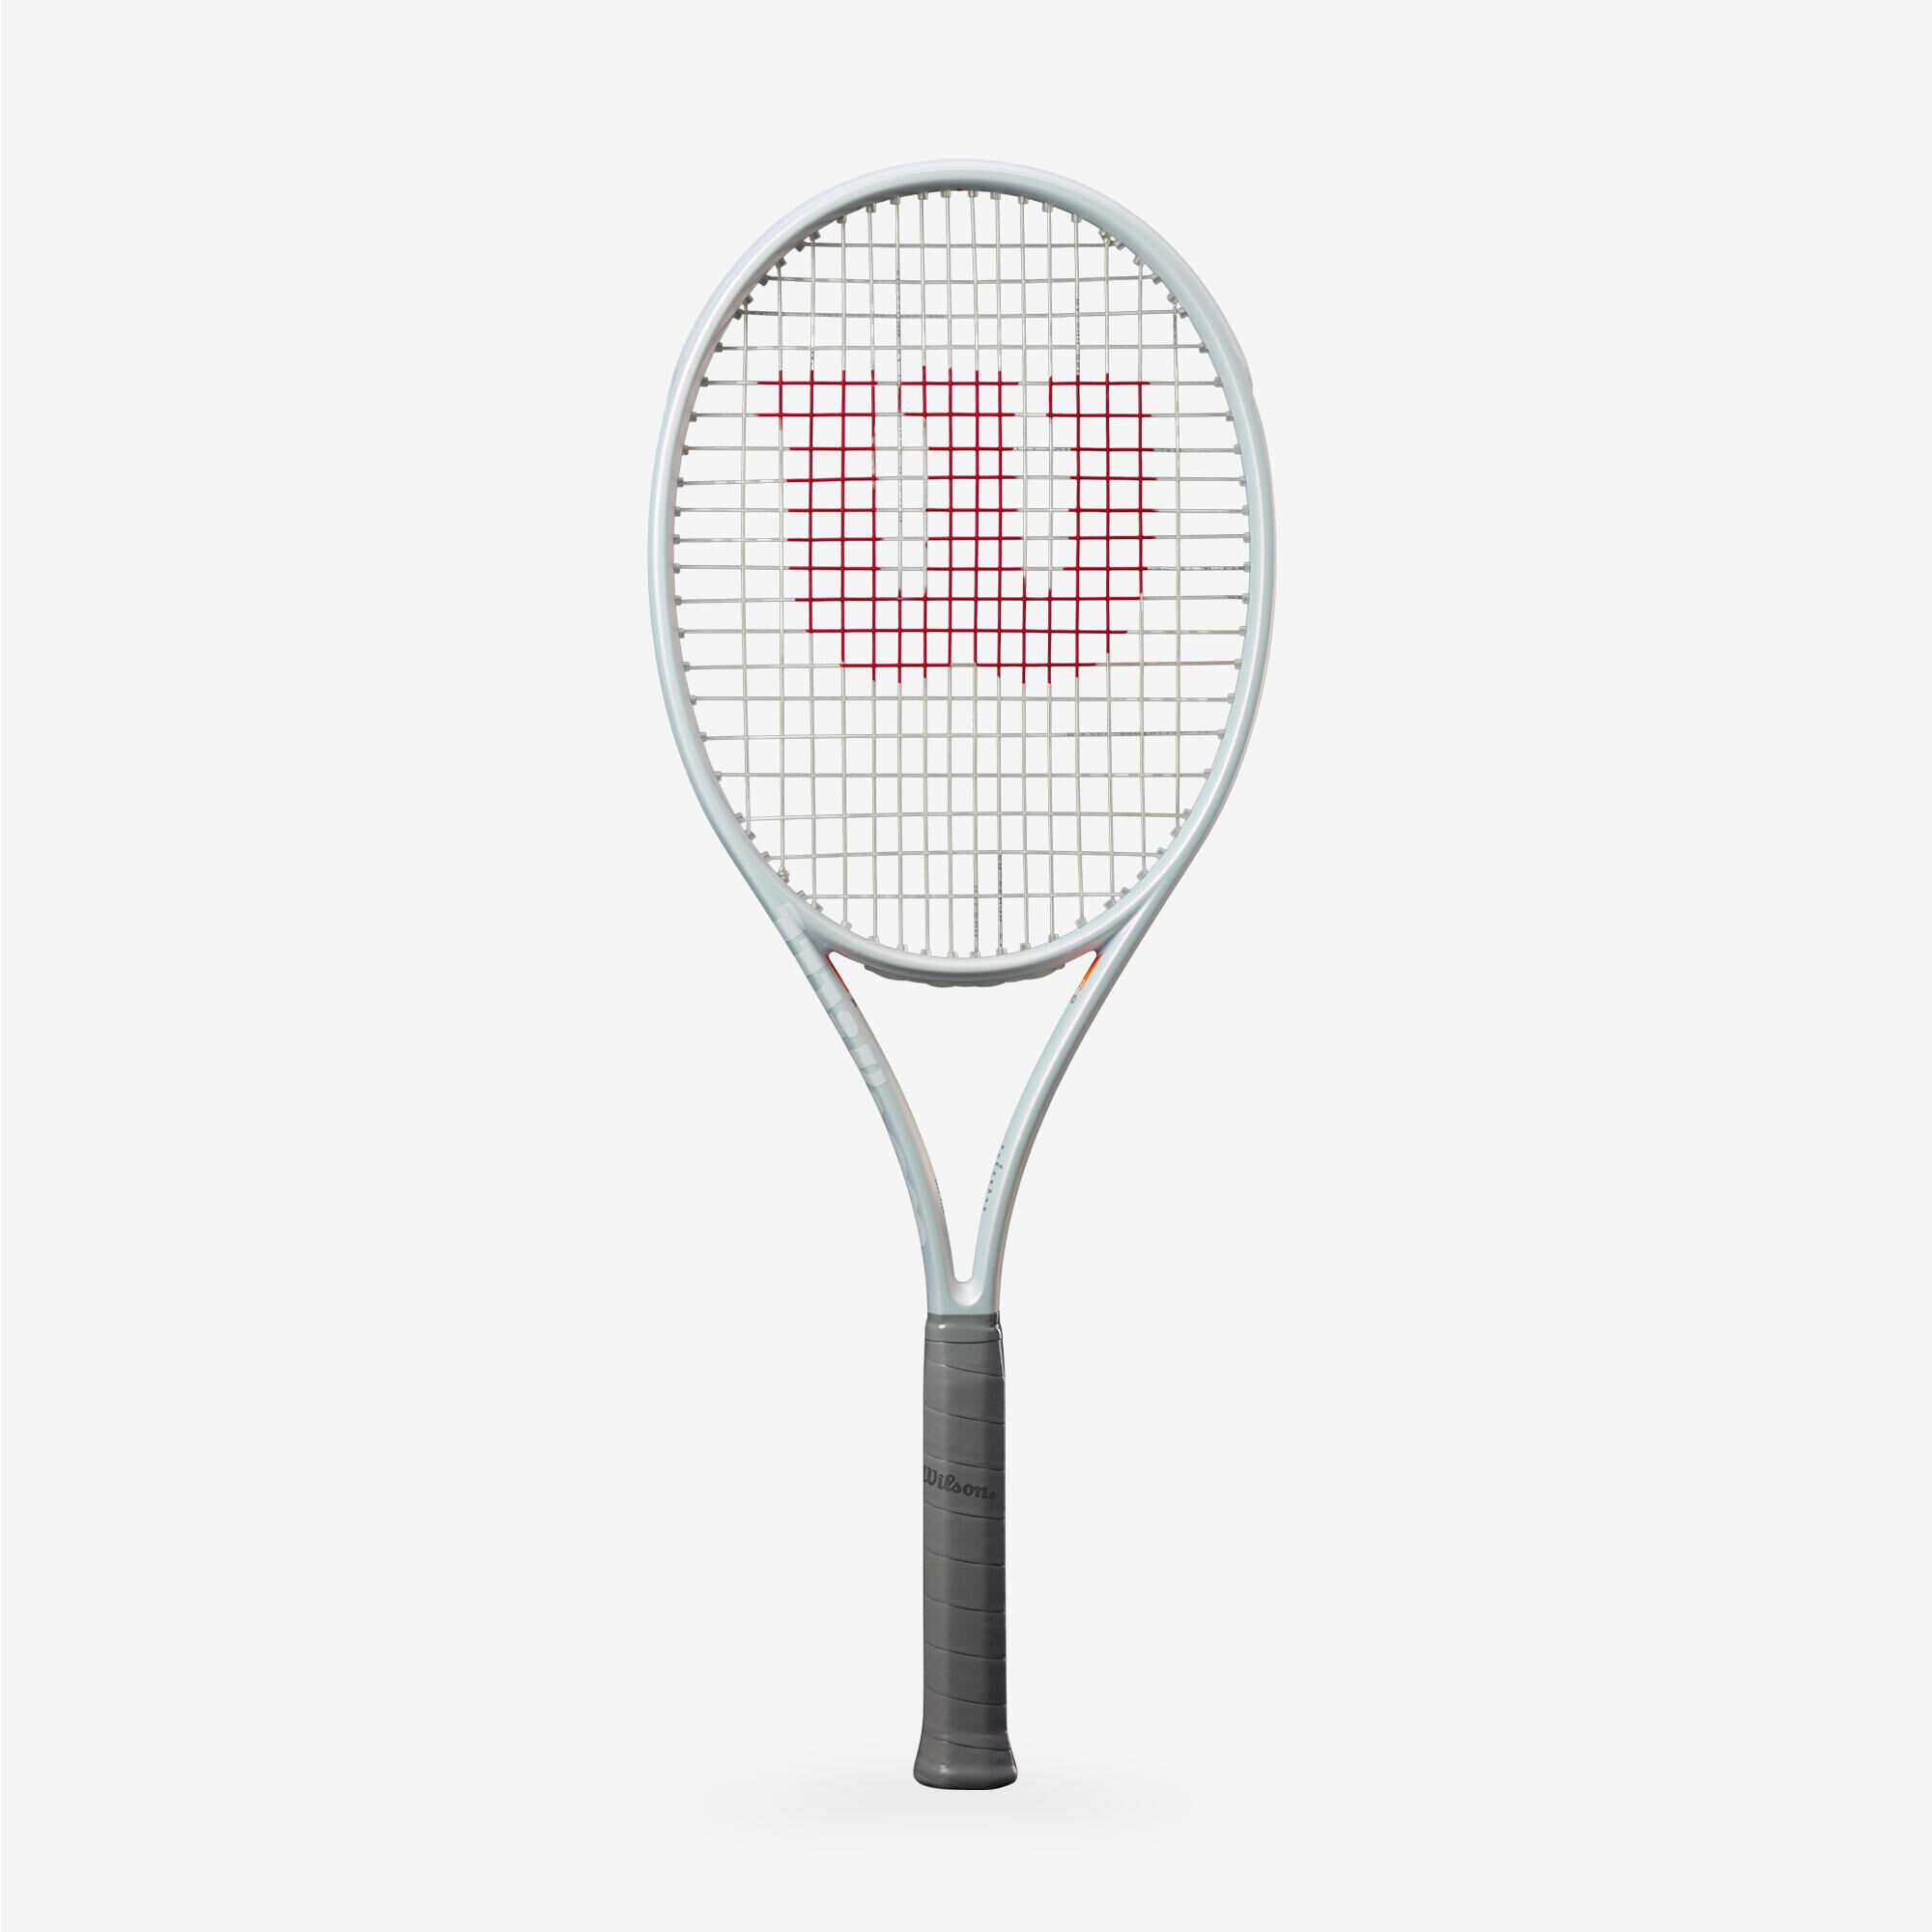 WILSON Adult Tennis Racket Shift 99 V1 300 g Unstrung